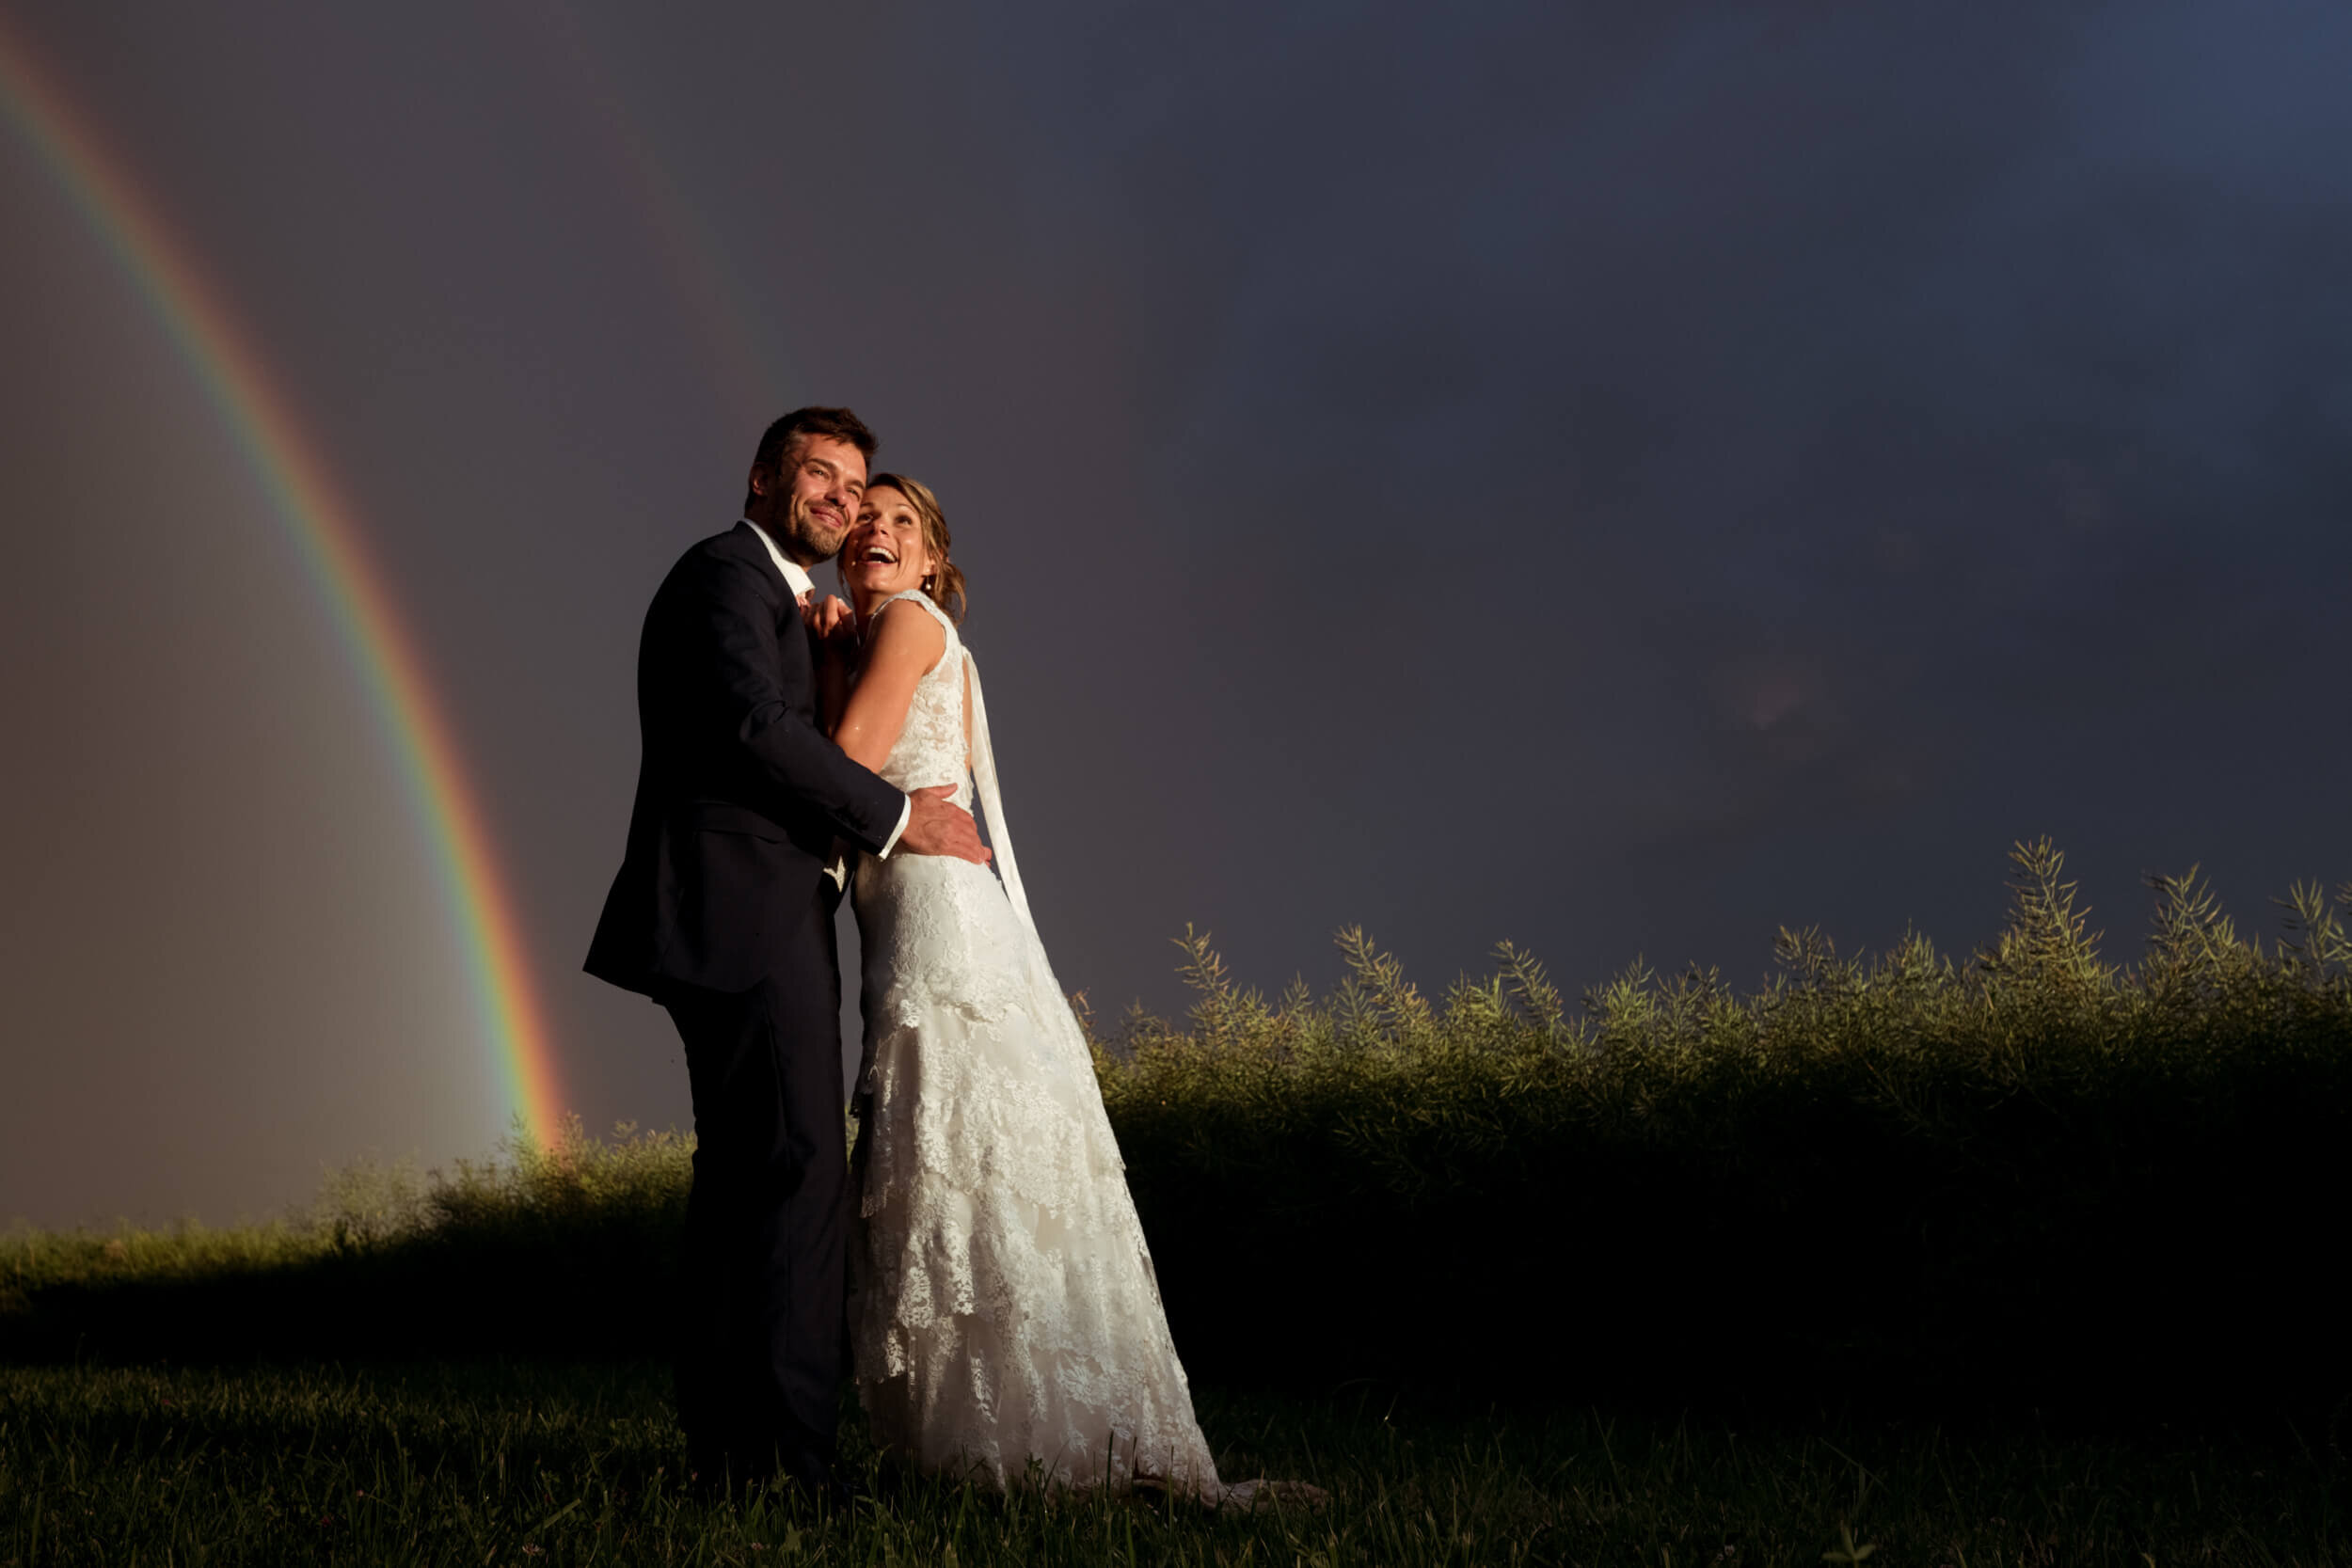 Puyrigaud photographe mariage wedding photographer couple arc en ciel